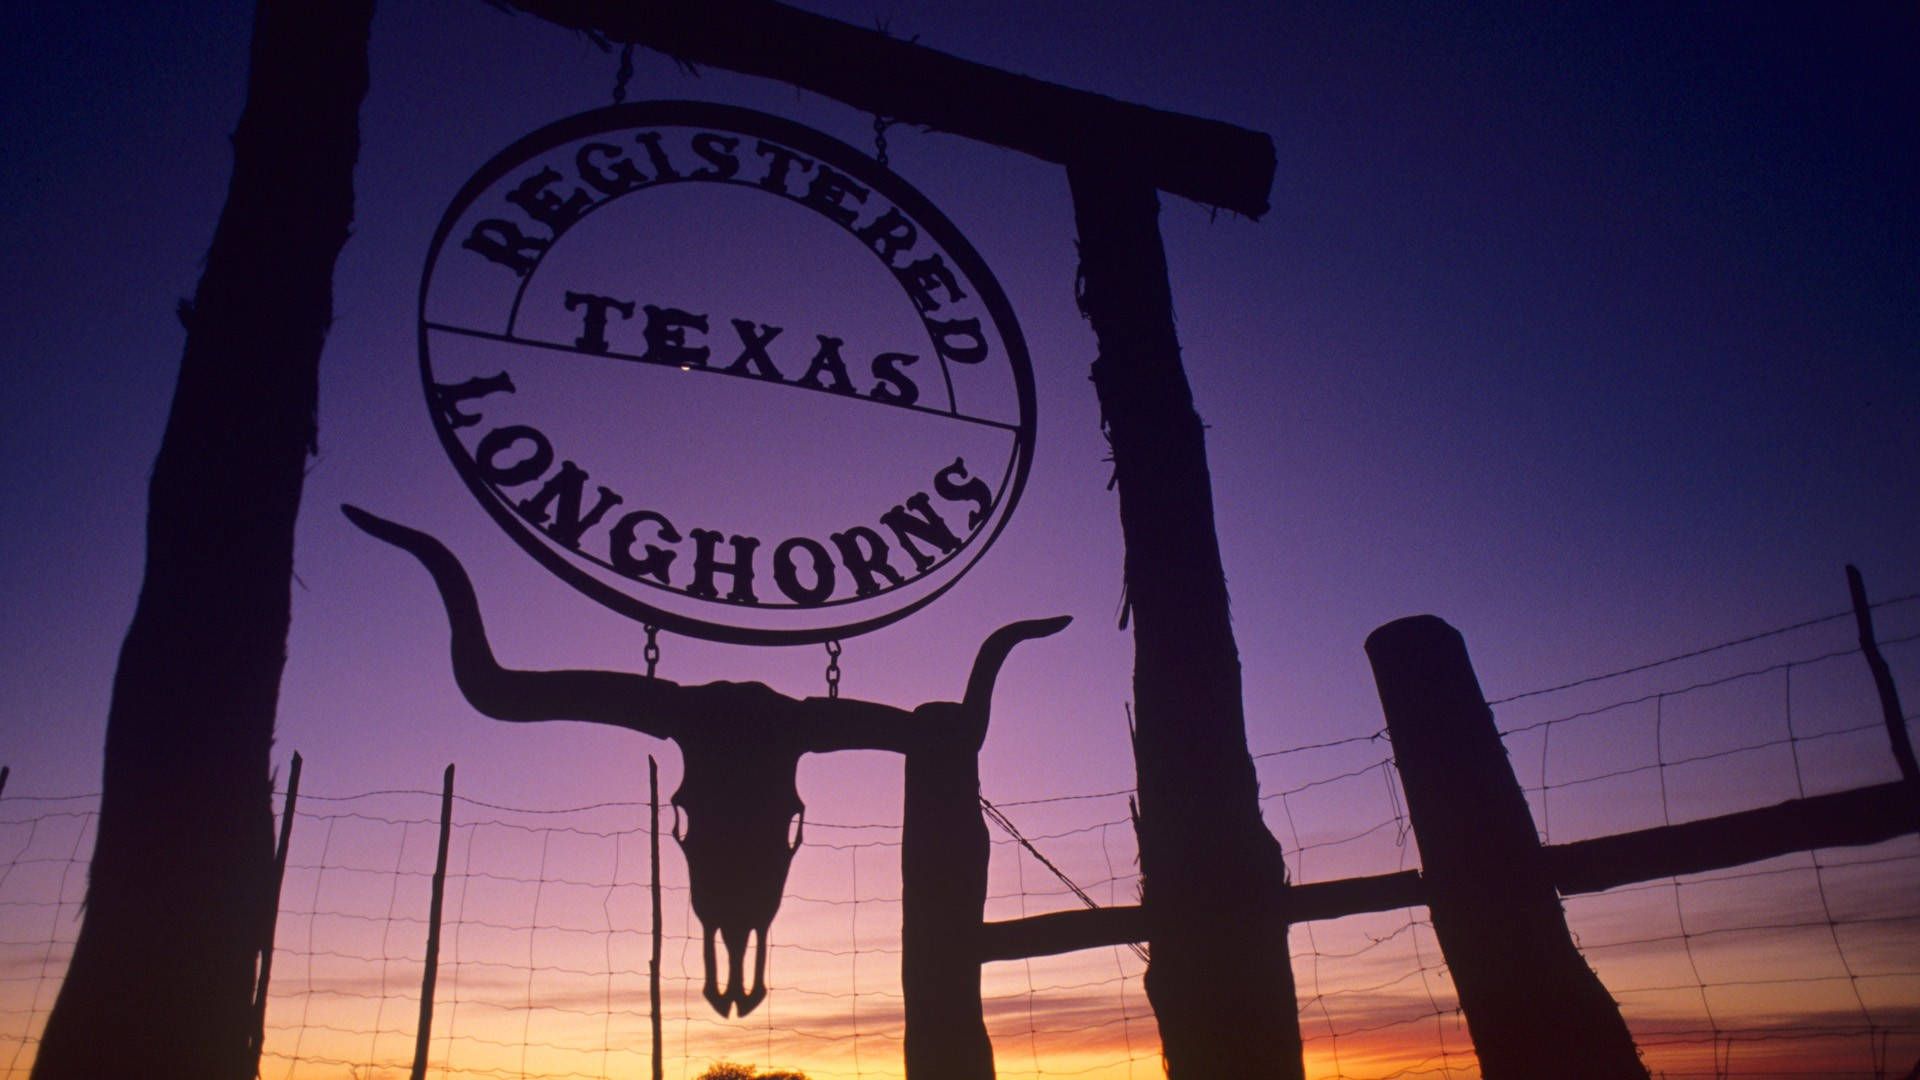 Download Texas Longhorns Logo Wallpaper